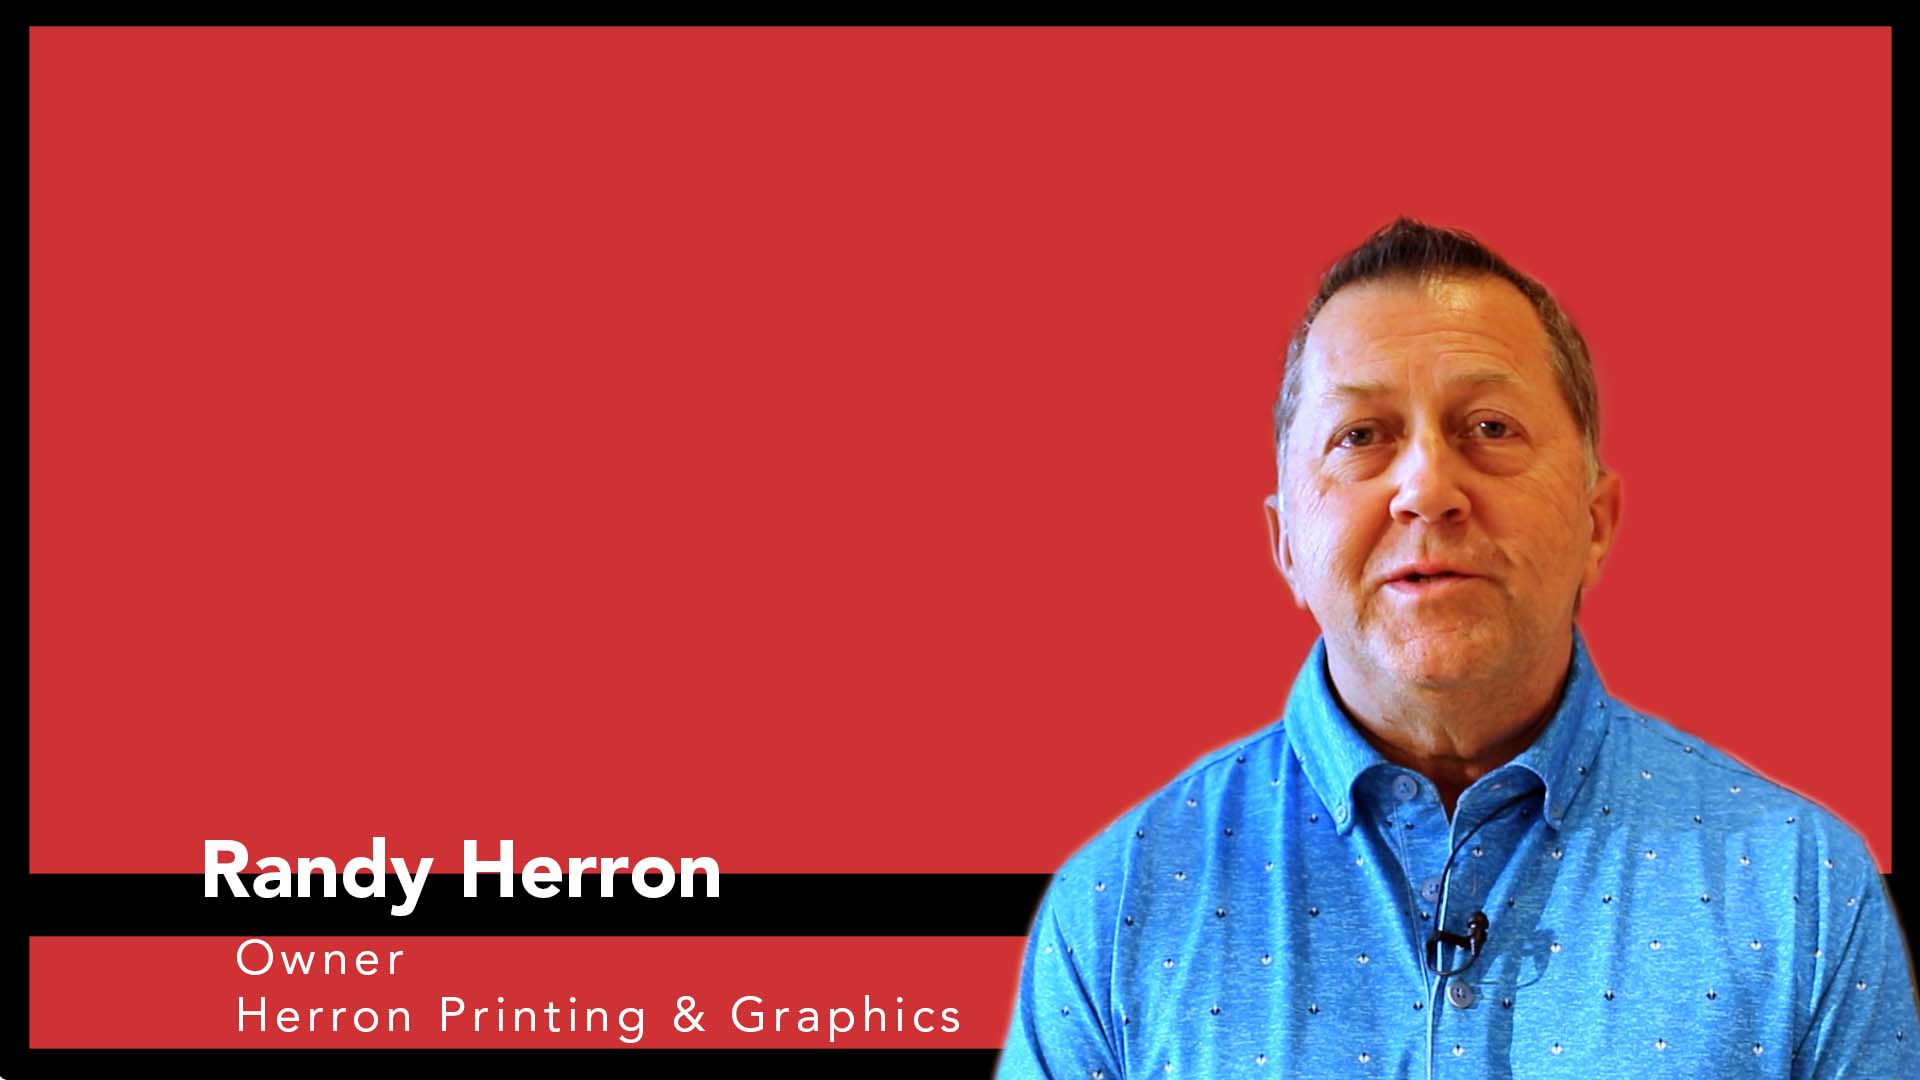 Herron Printing & Graphics